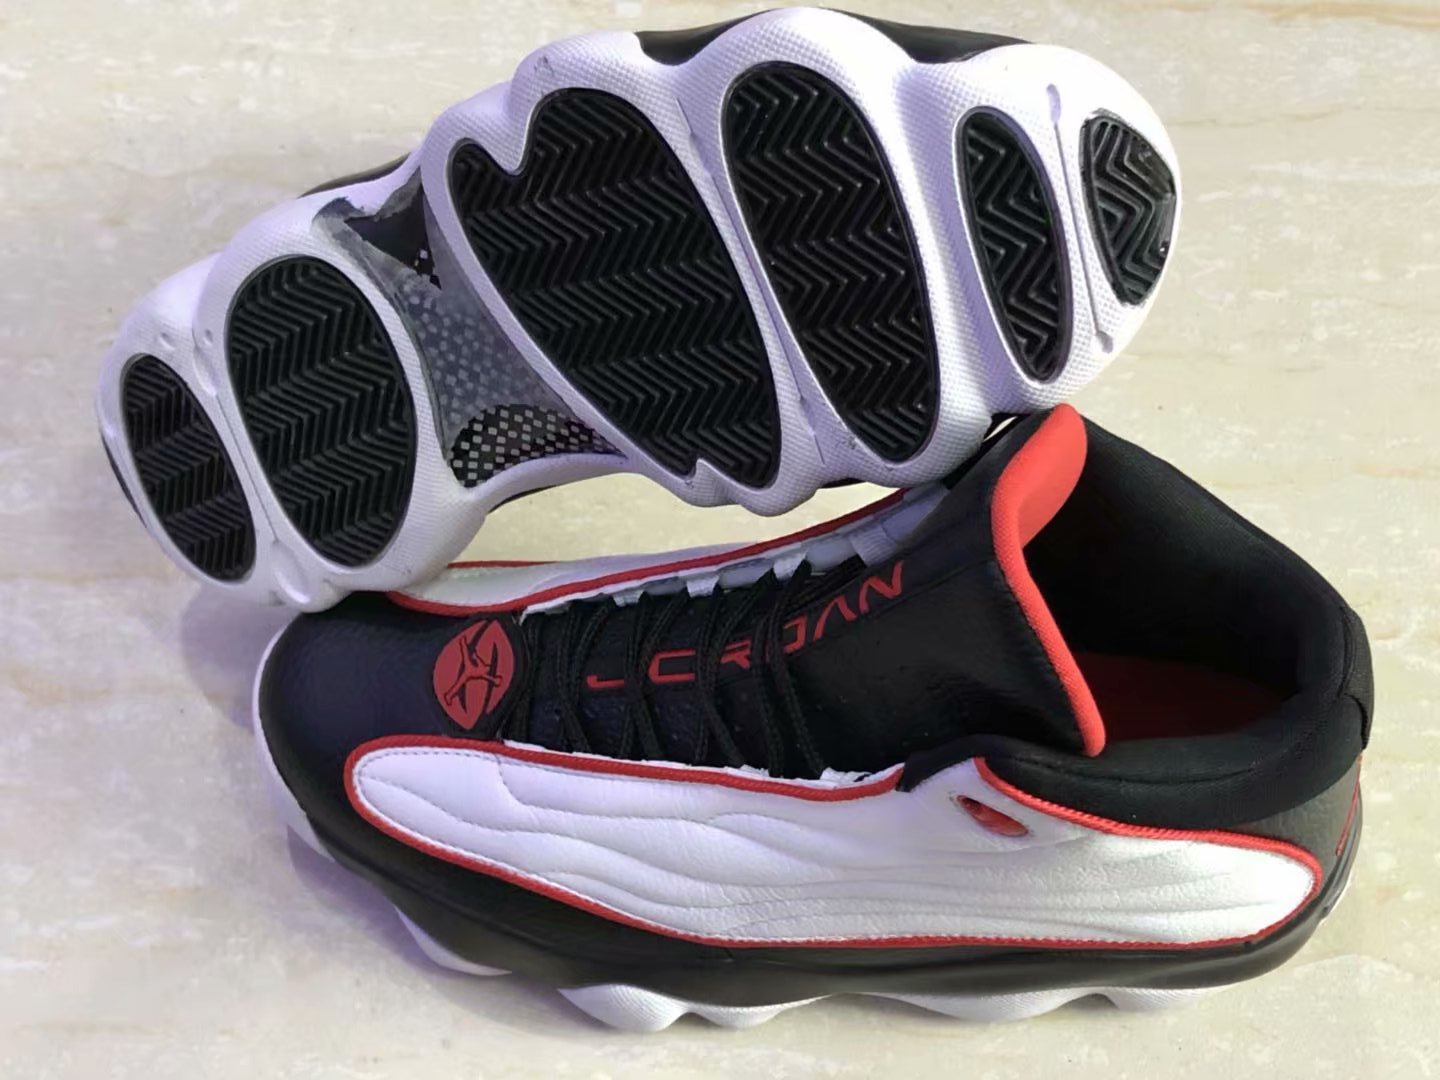 New Air Jordan 13.5 Black White Red Shoes